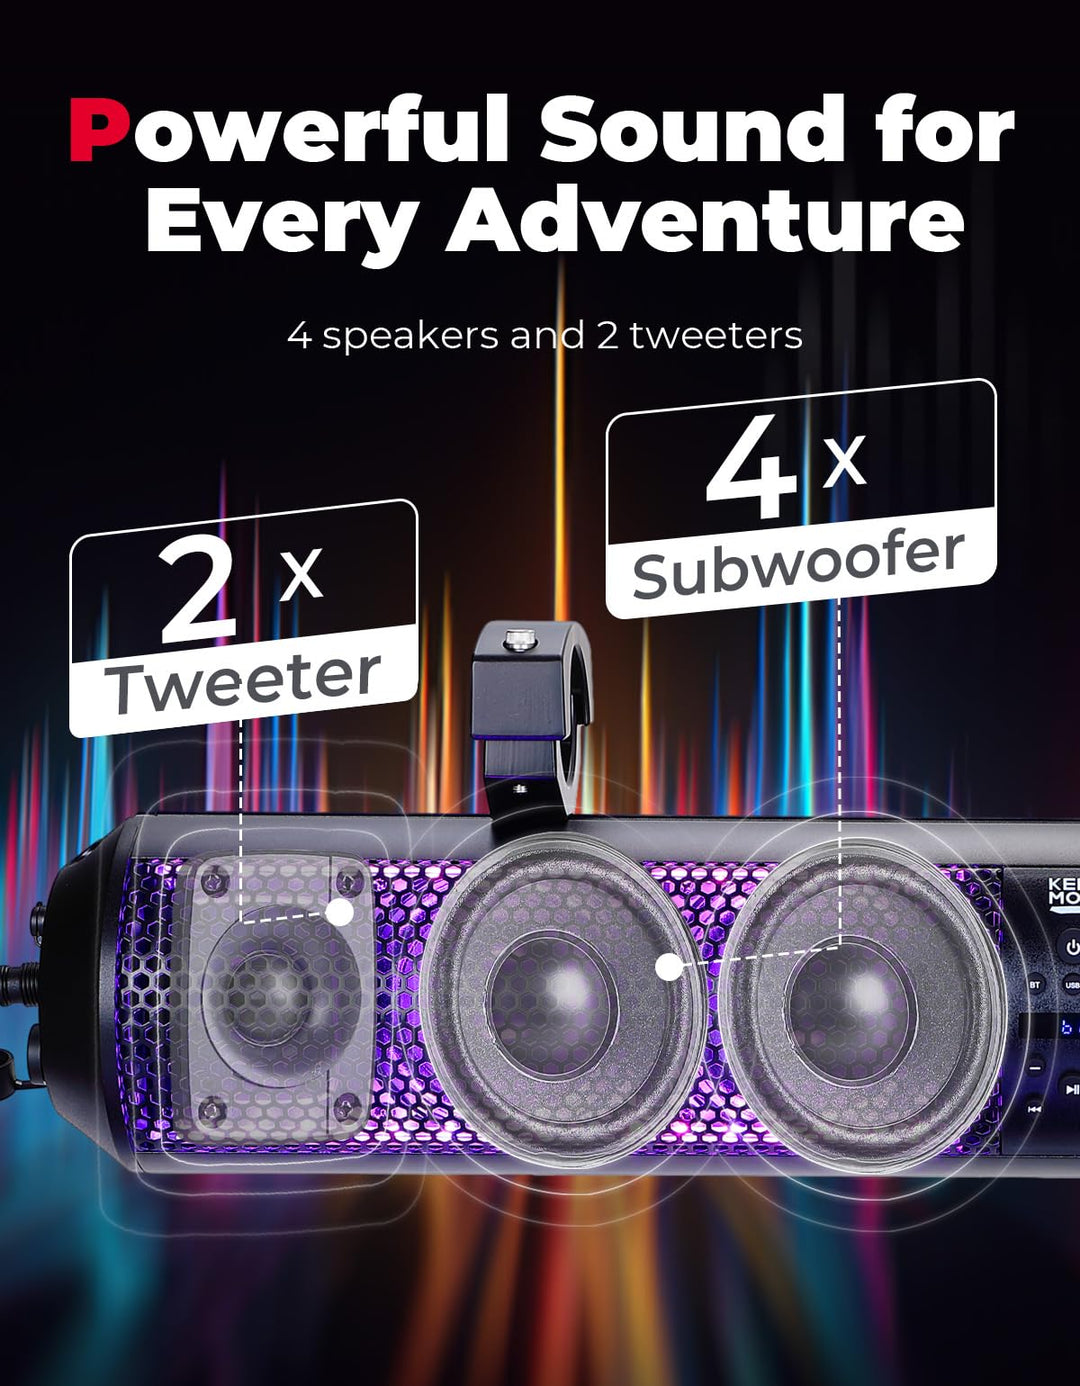 RGB UTV Soundbar, 28 Inch SXS Speaker for 1.56"- 2.25" Roll Cage - Kemimoto